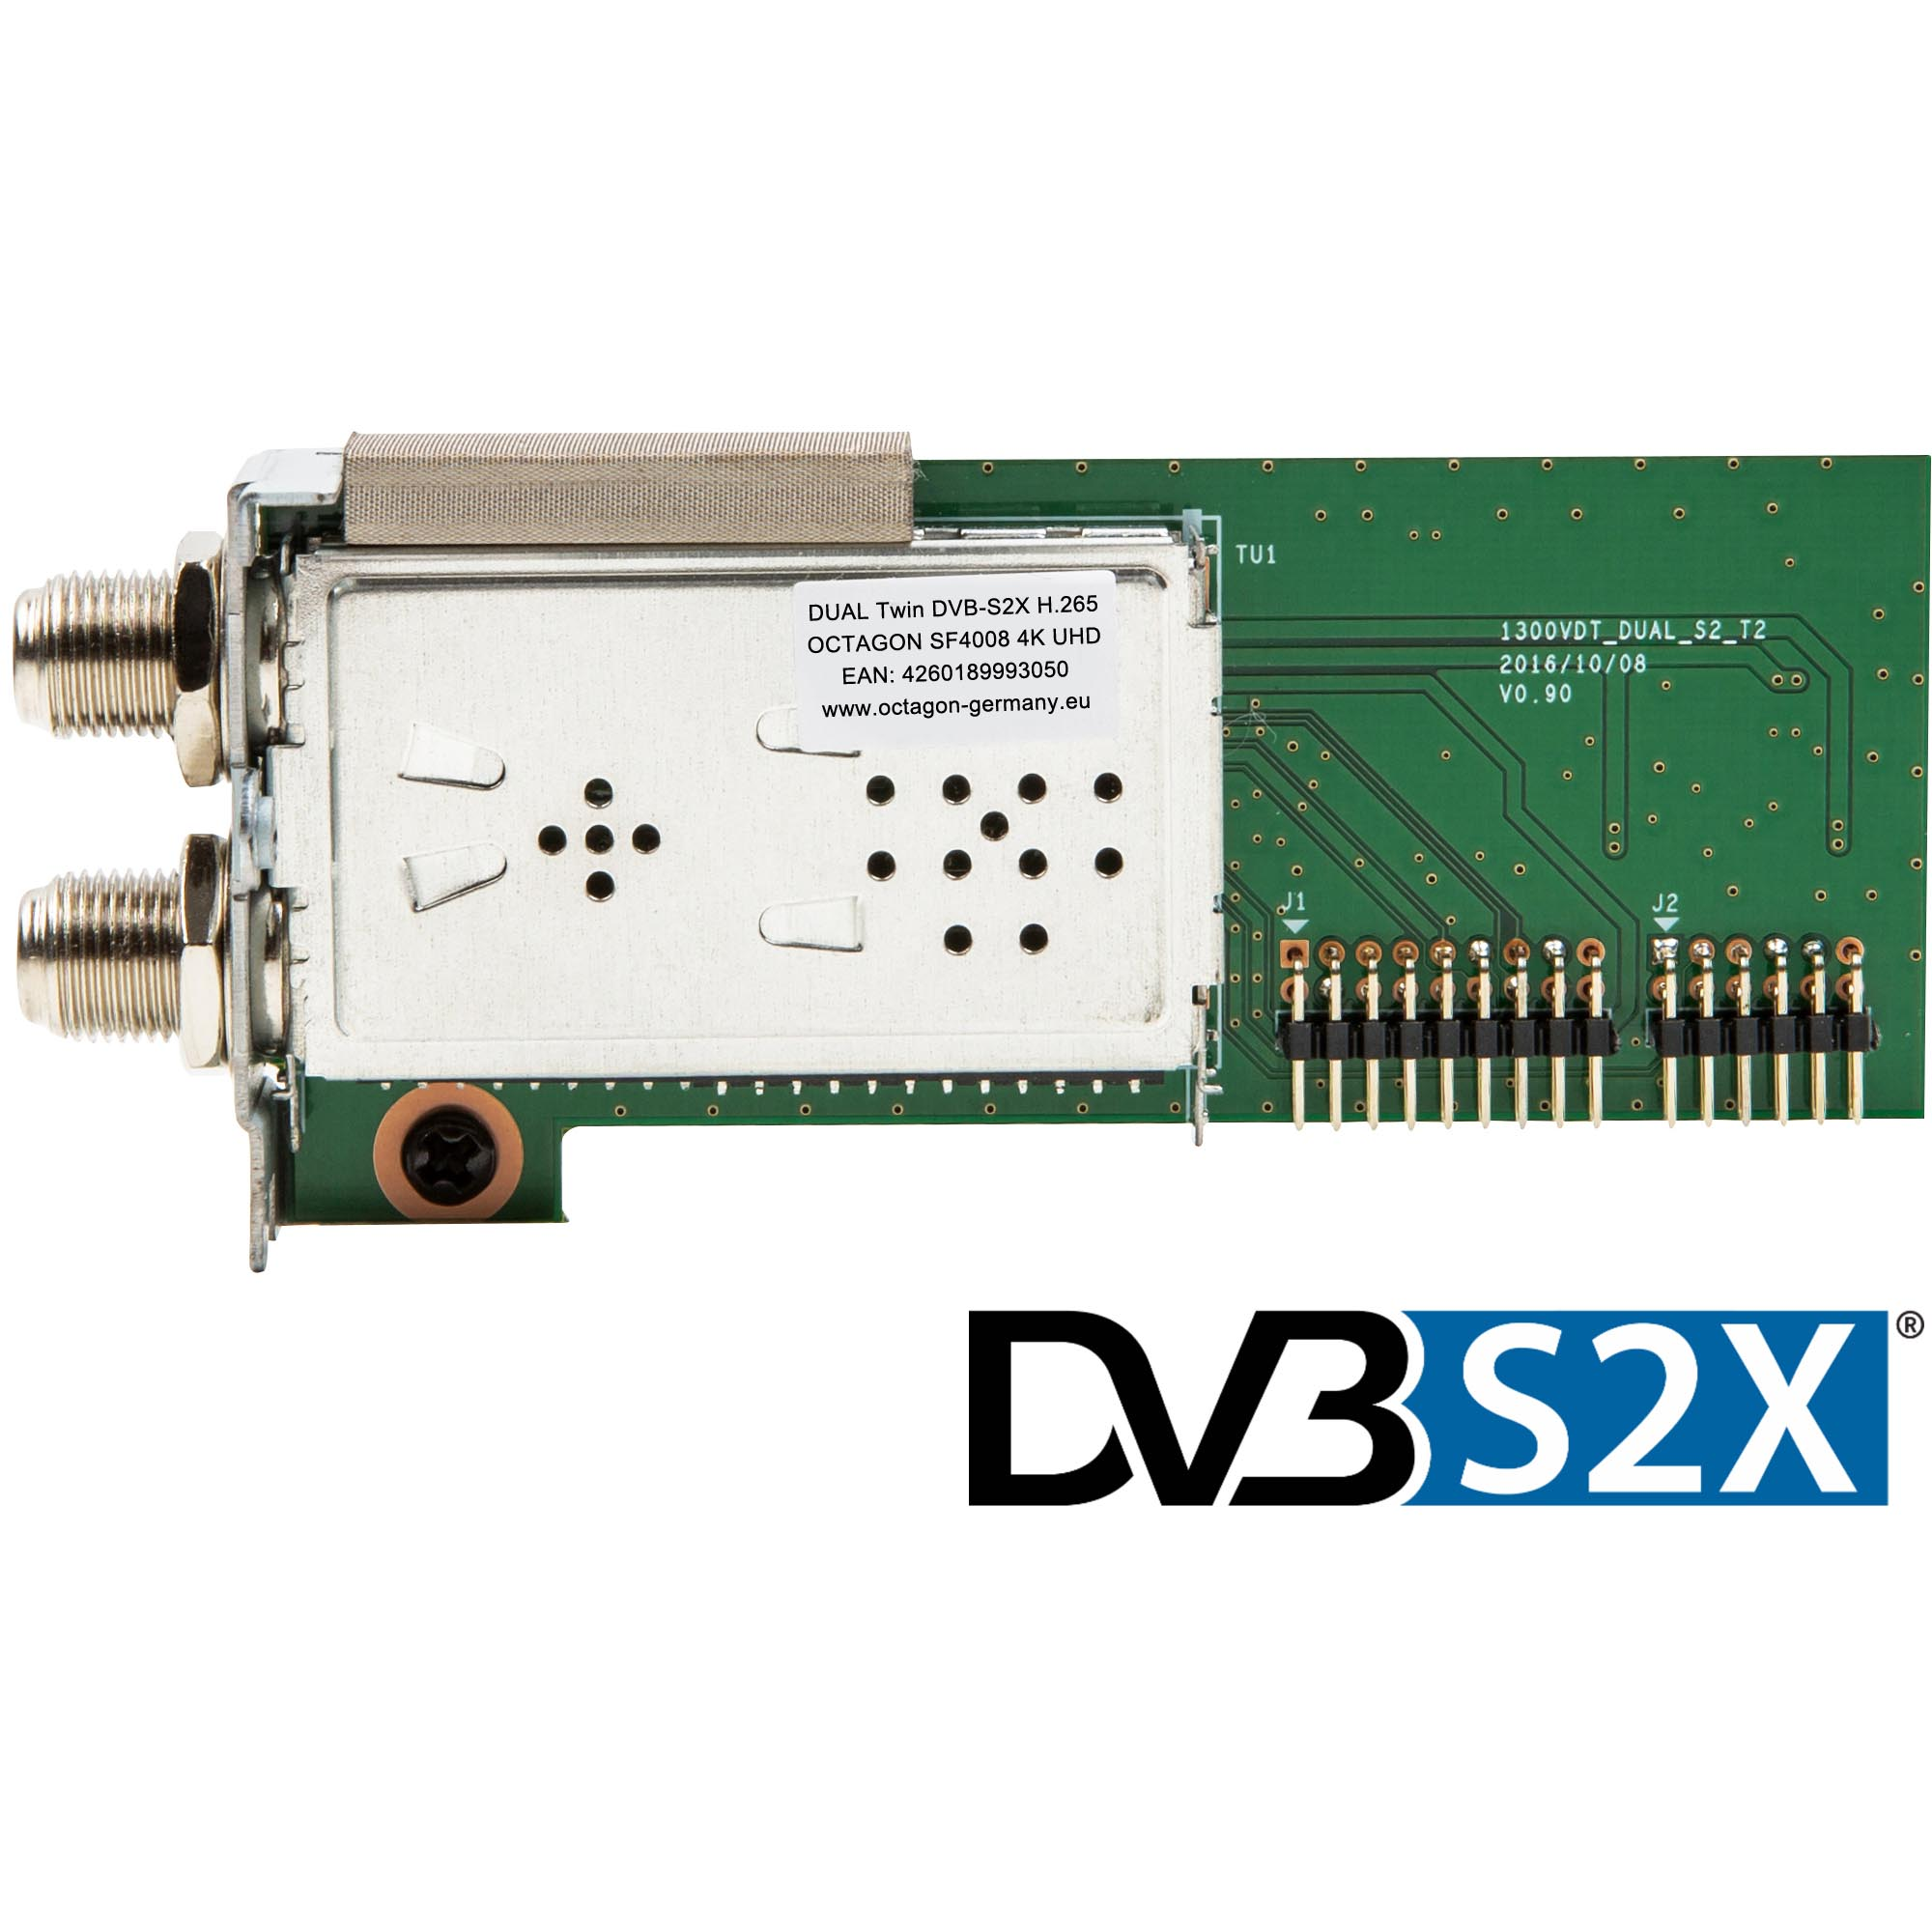 DVB-S2X UHD Octagon 4K OCTAGON SF4008 Tuner Twin DUAL (Silber) Tuner für